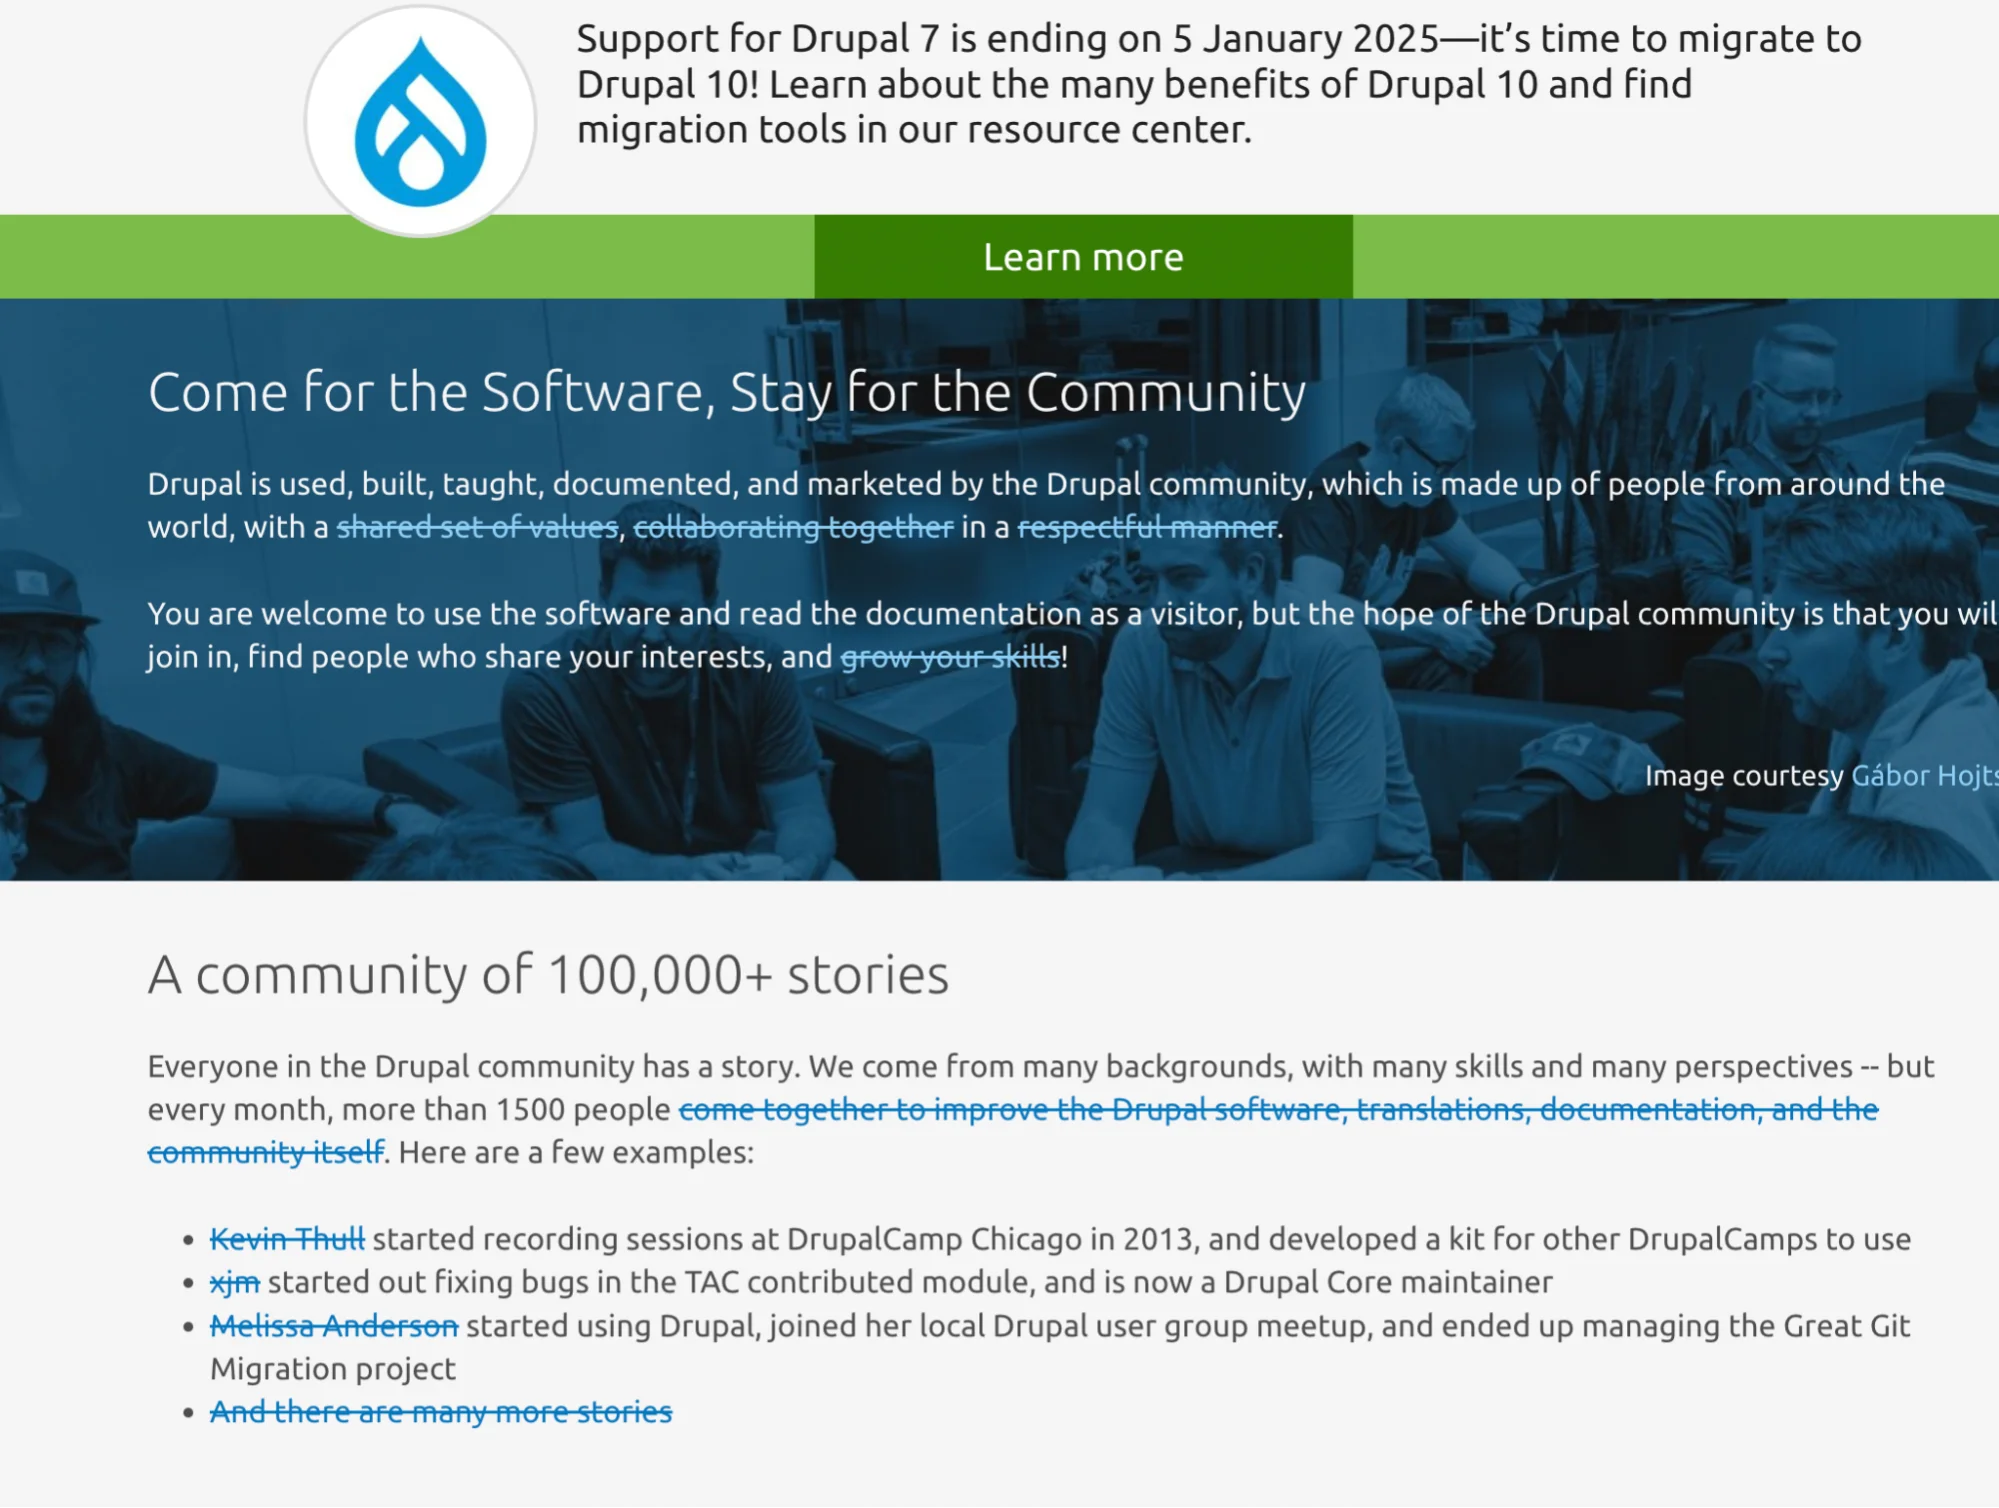 Drupal Dedicated Community